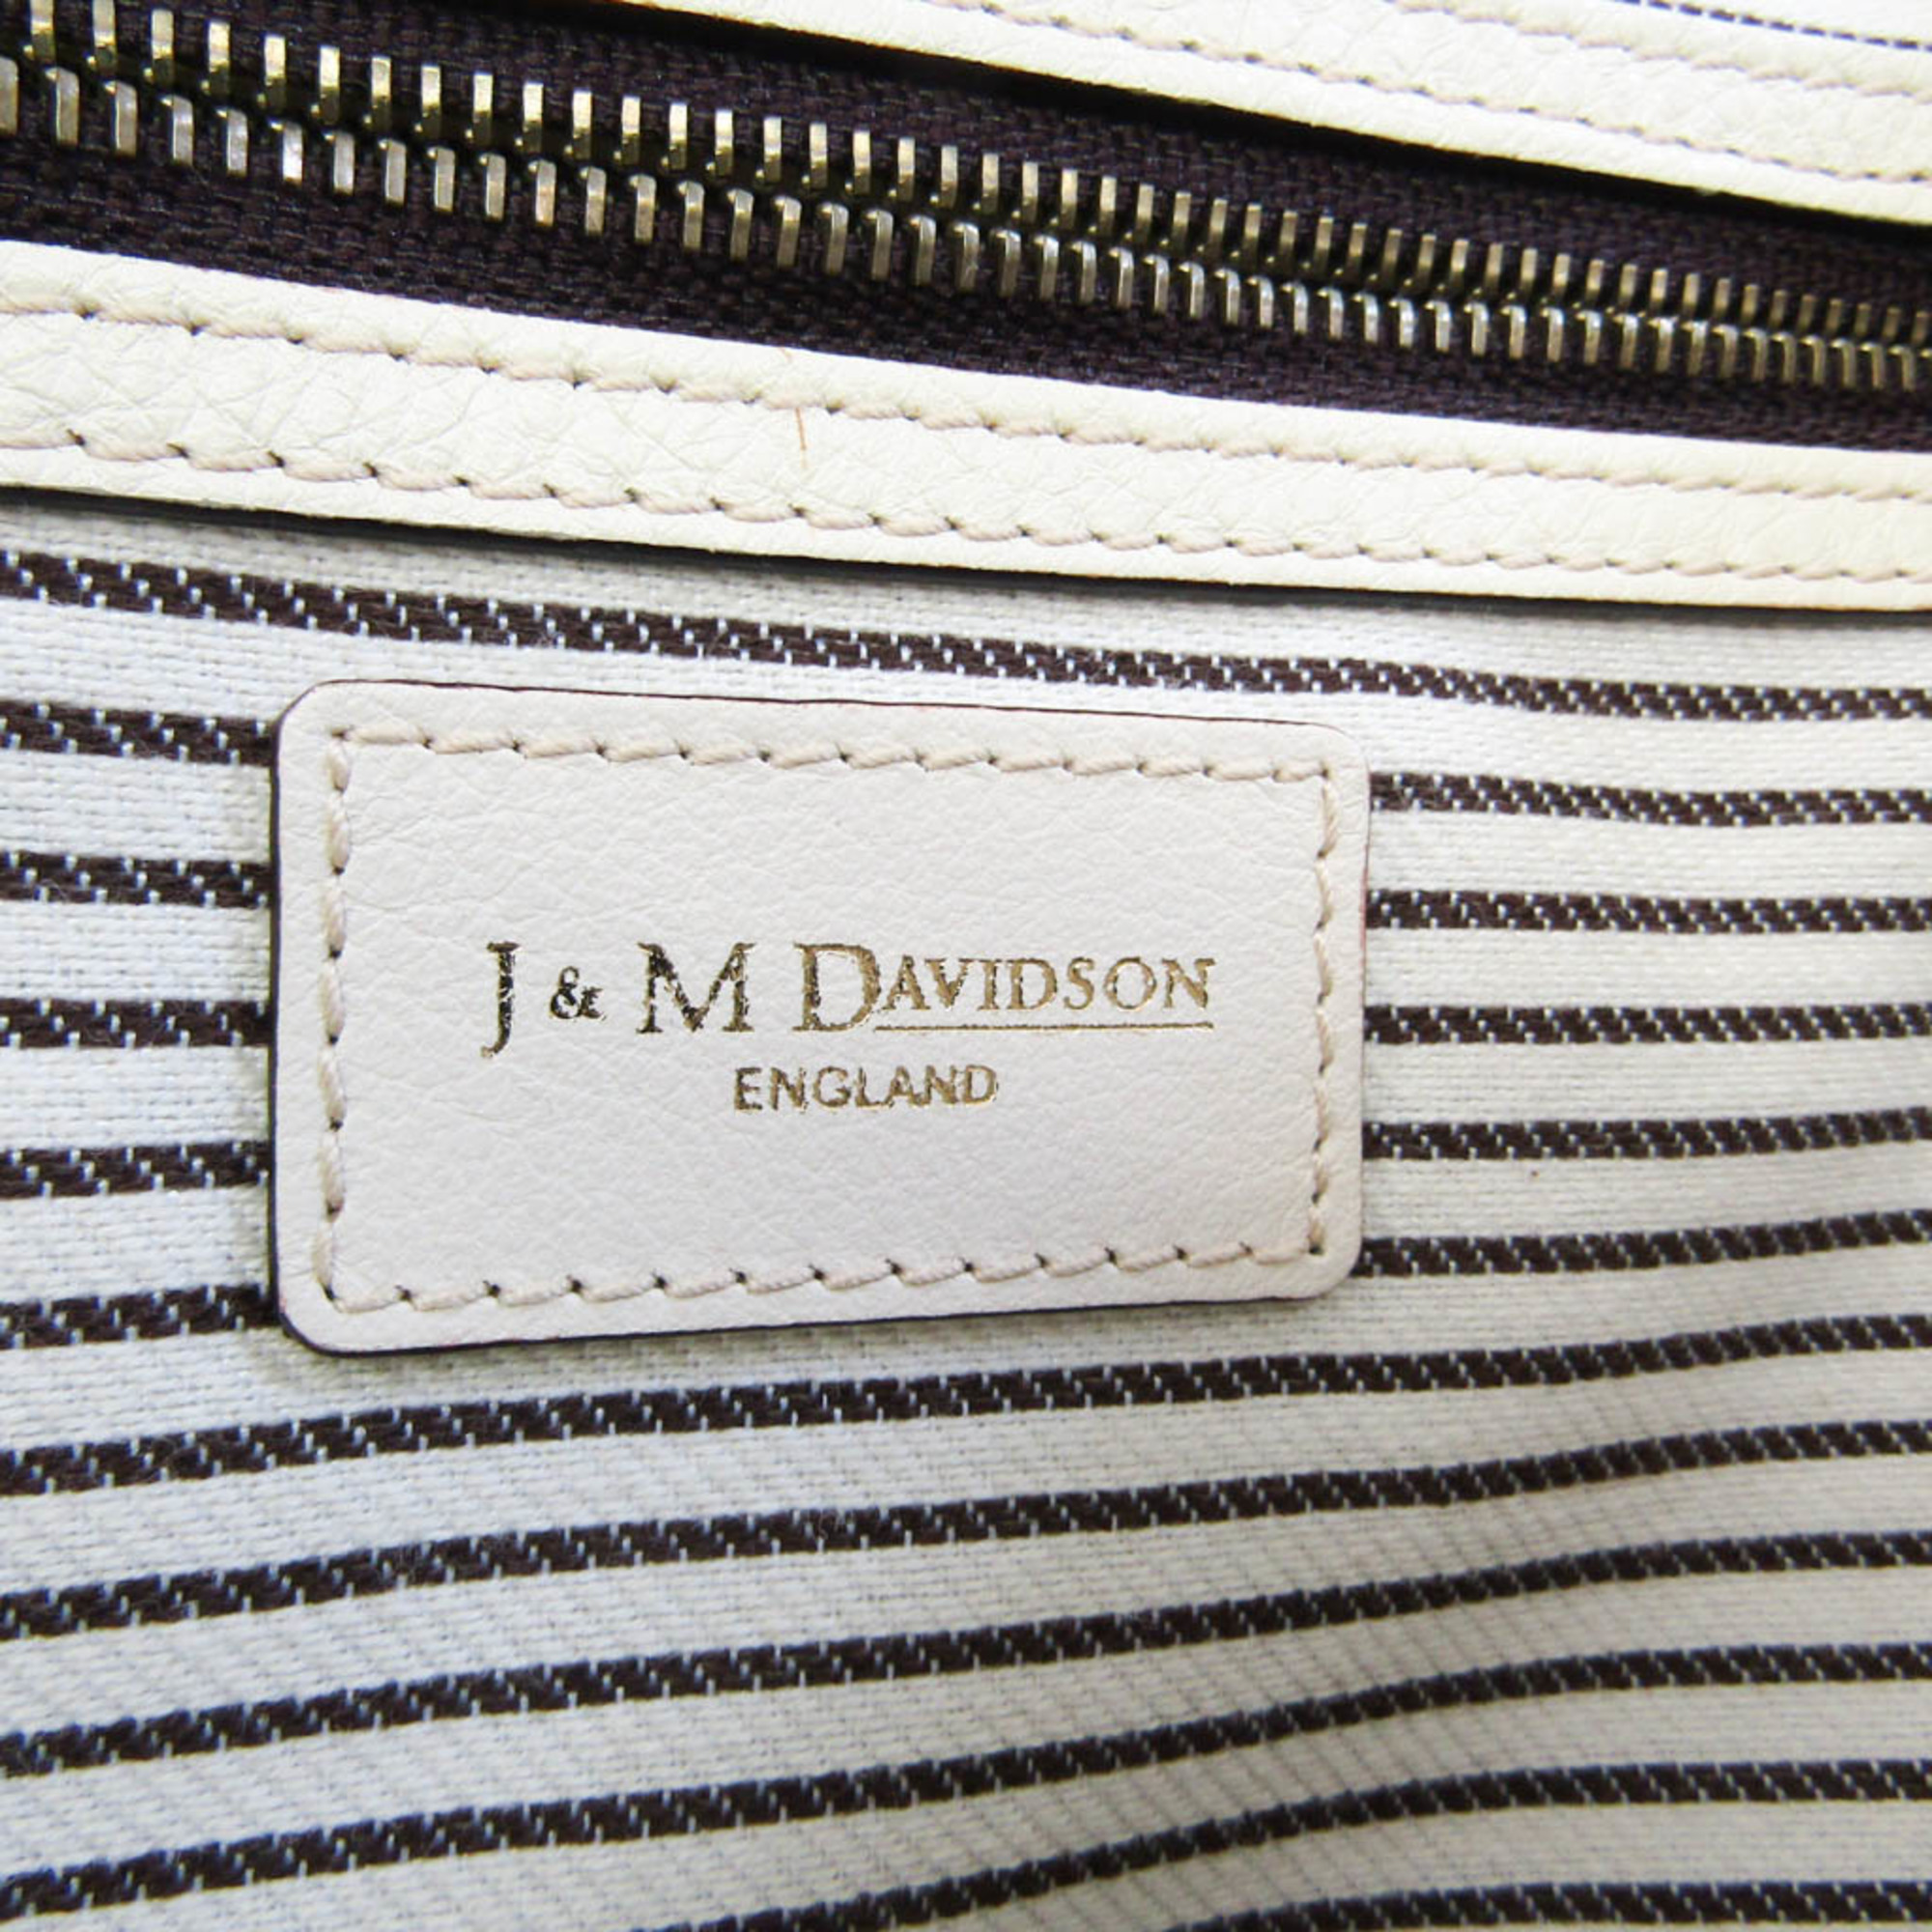 J&M Davidson 1117 Women's Canvas,Leather Tote Bag Light Blue,Off-white